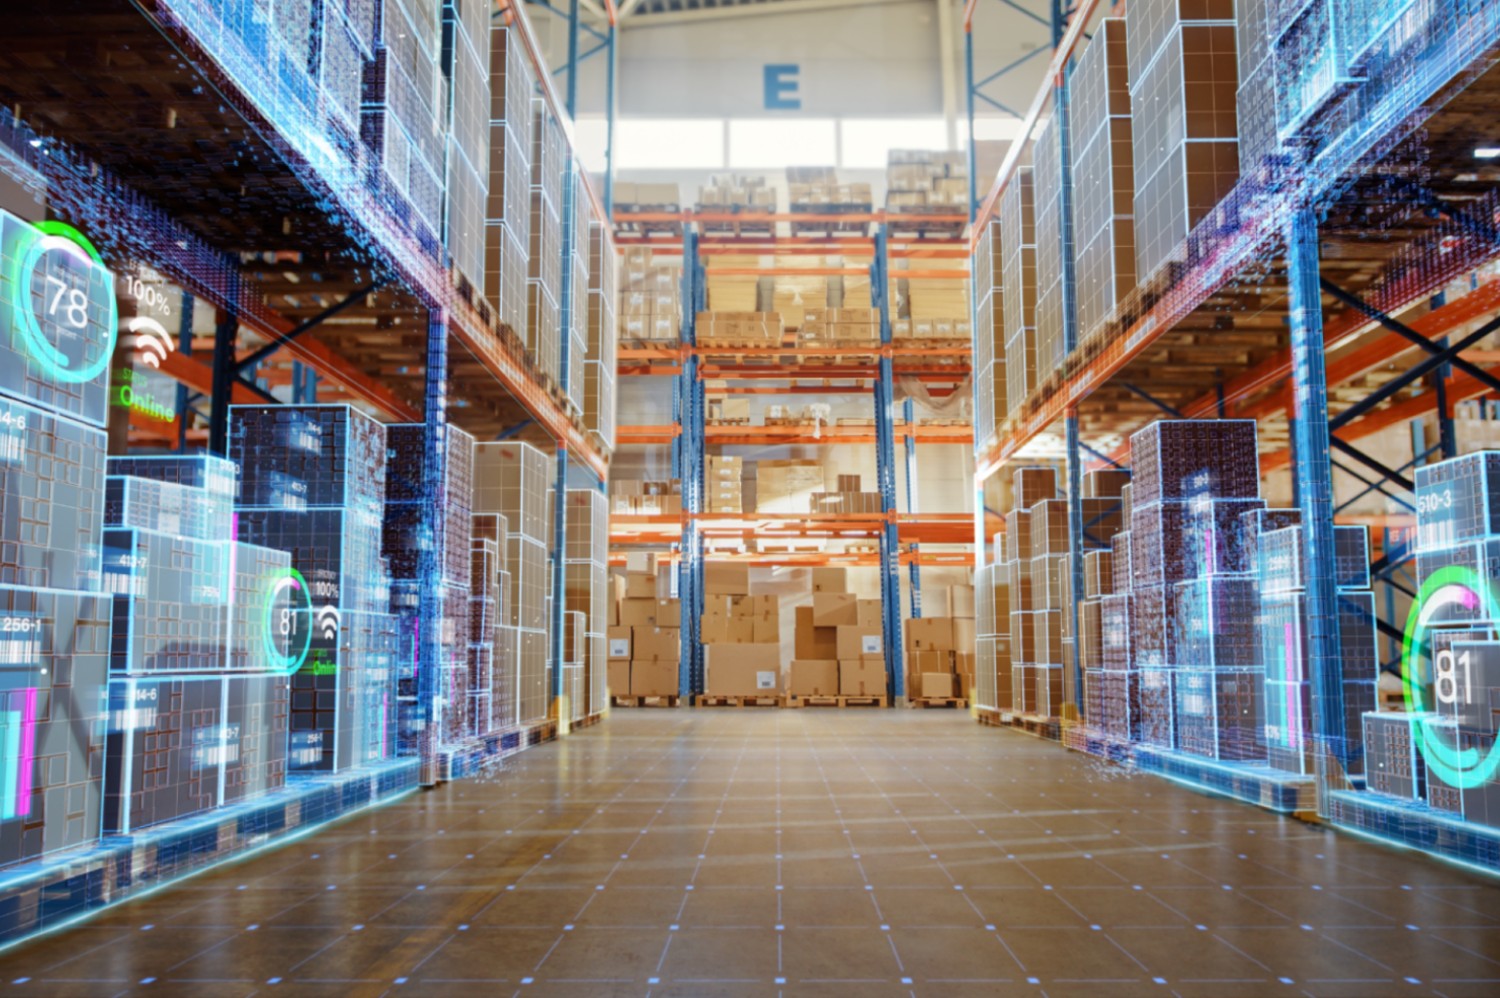 Futuristic Technology Retail Warehouse: Digitalization and Visualization of Industry 4.0 Process